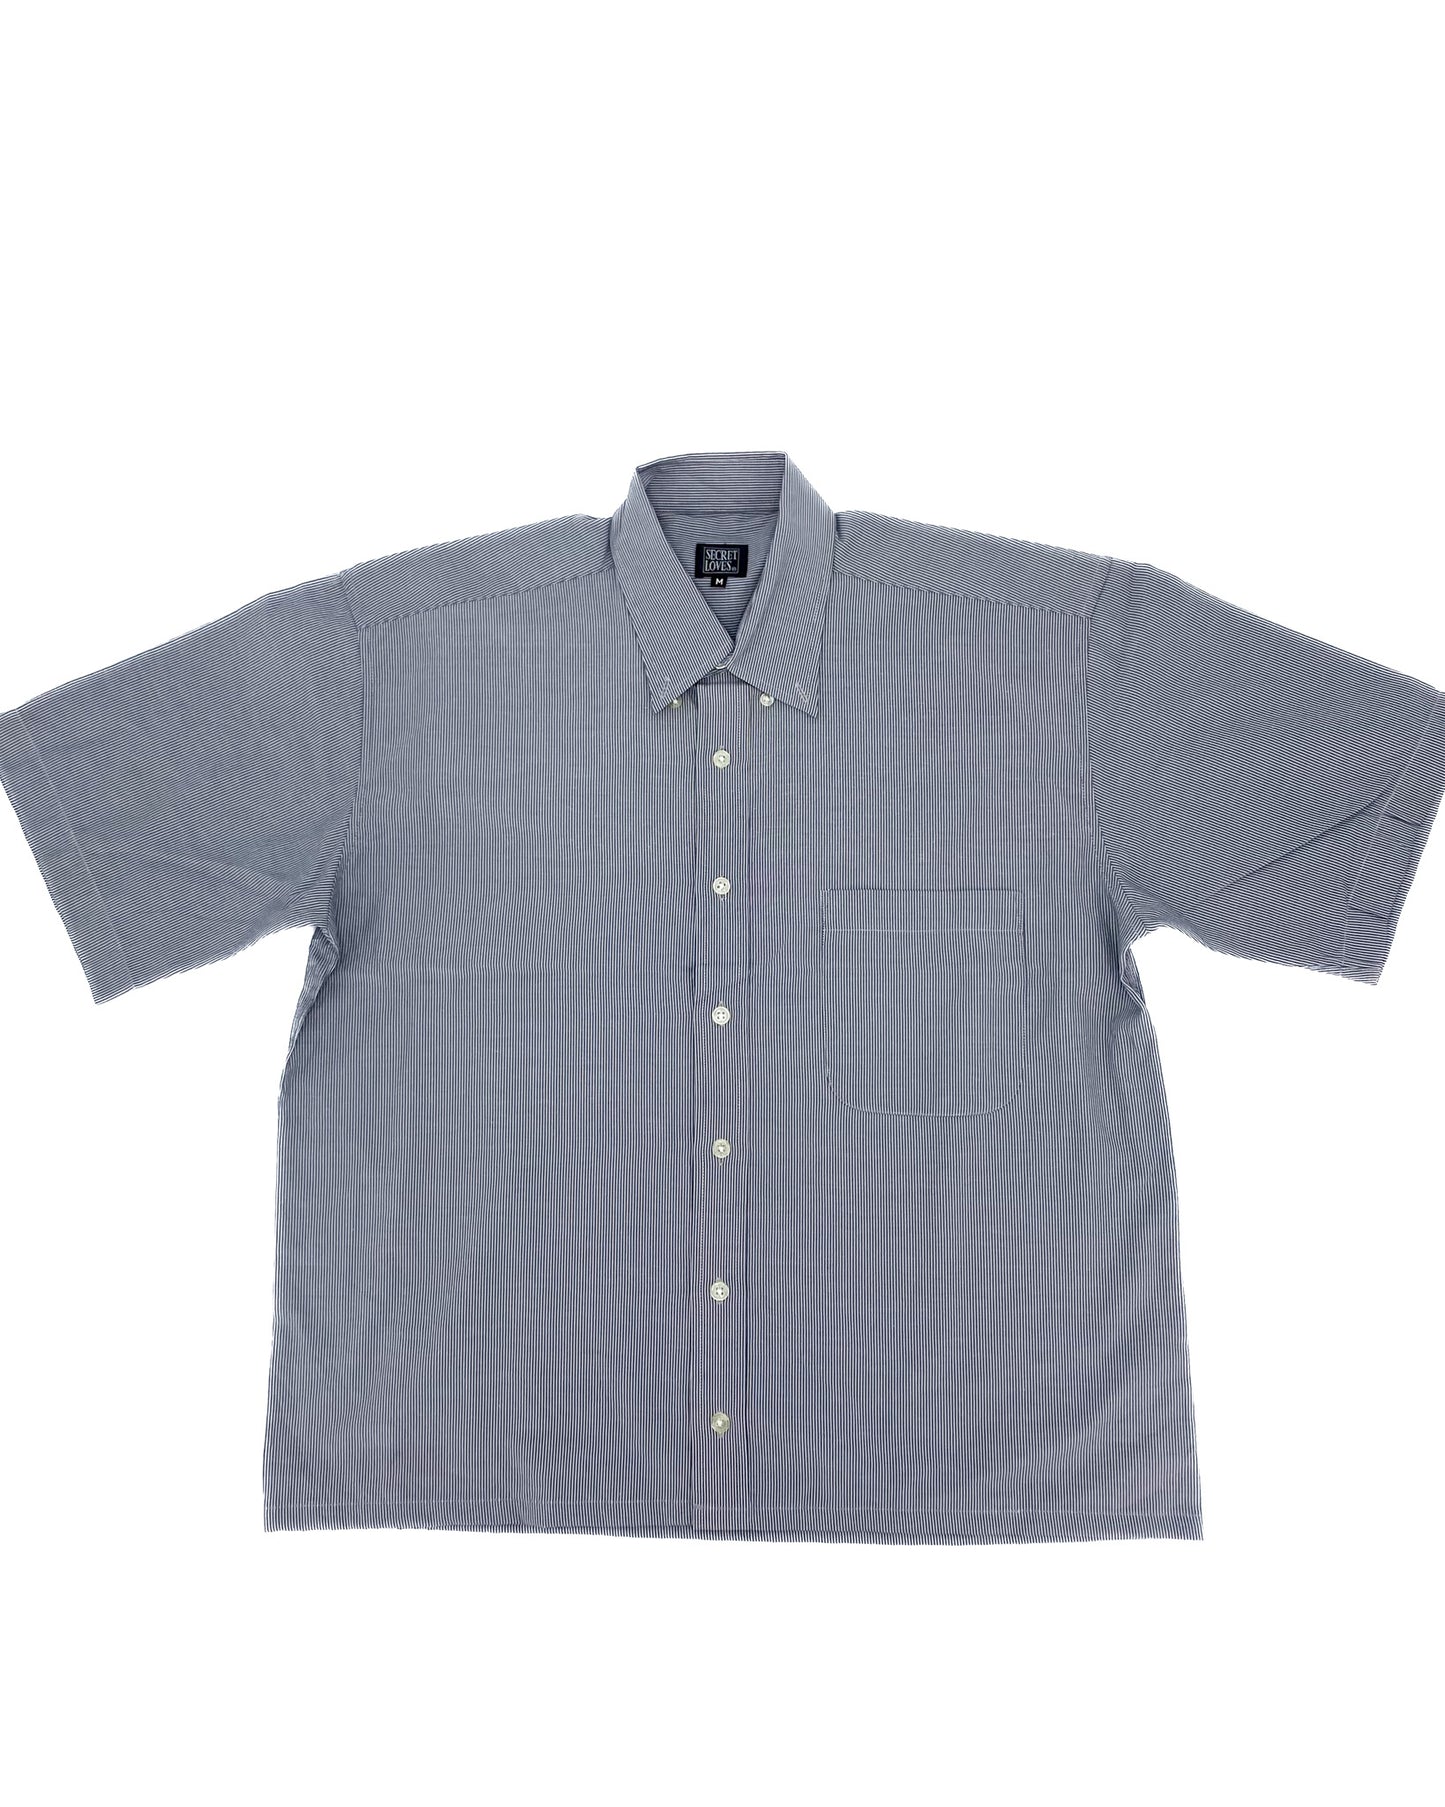 Vintage Blue/Grey Striped Shirt - M